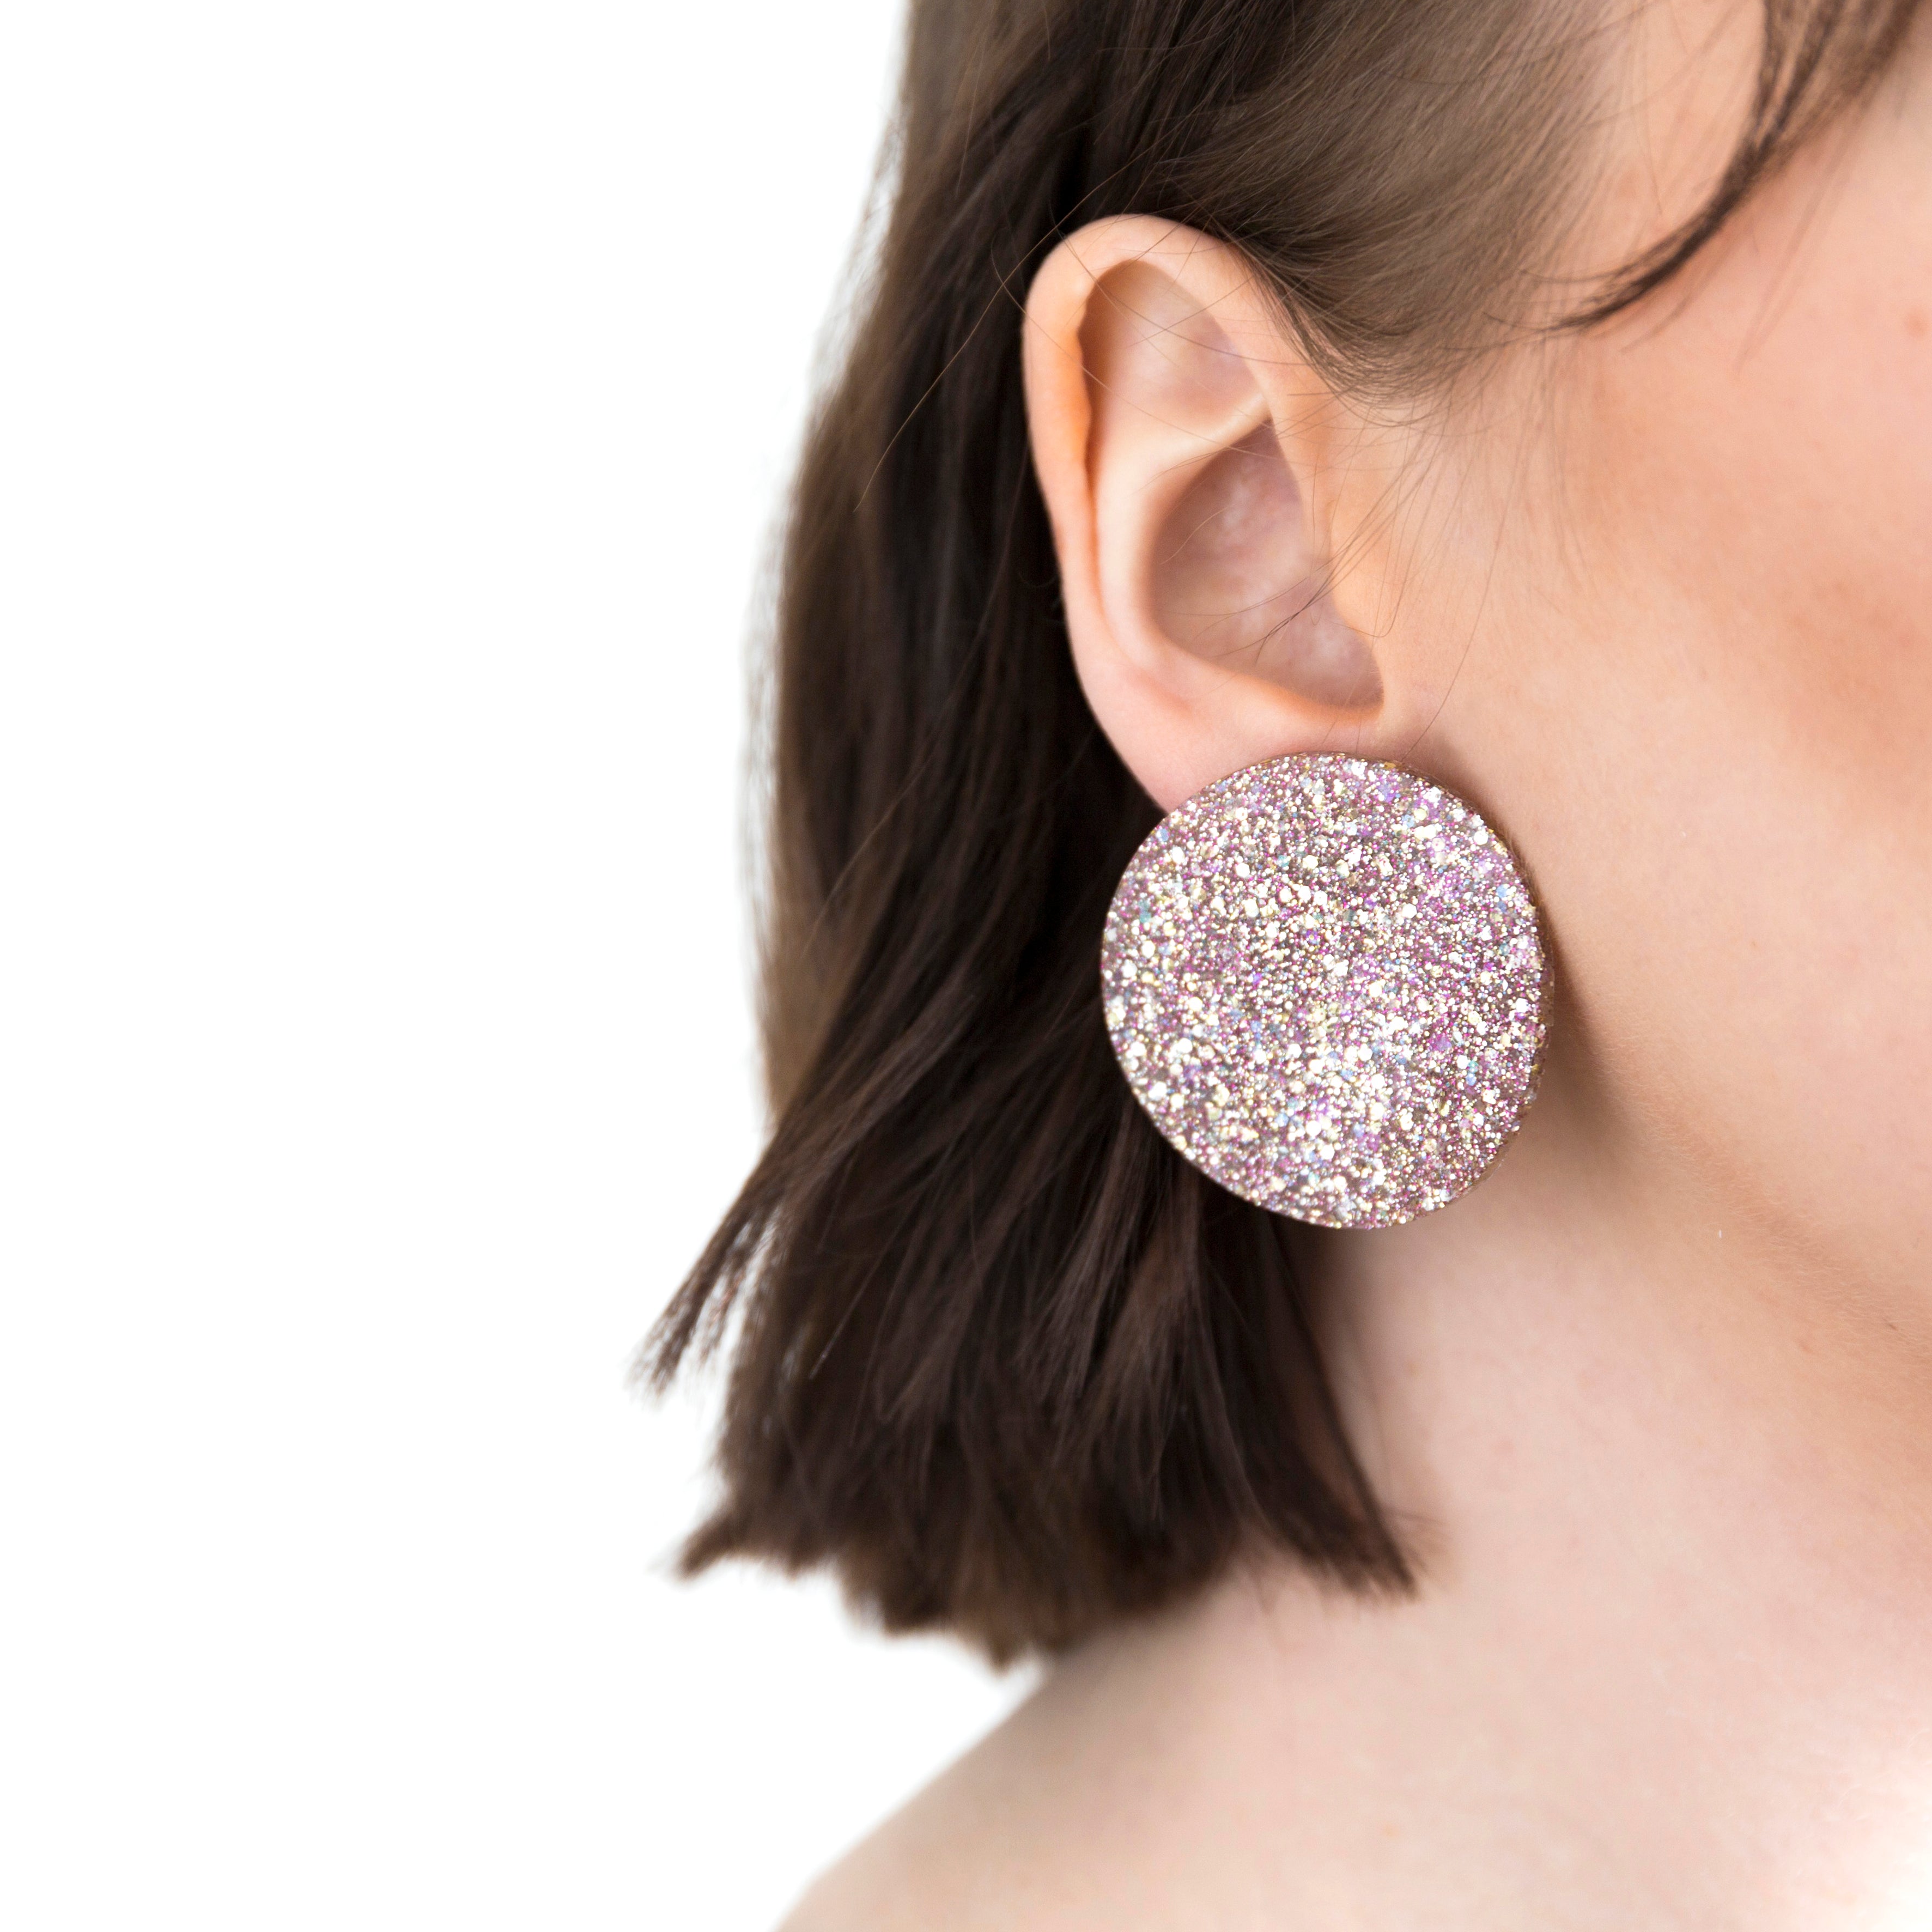 Paradise earrings